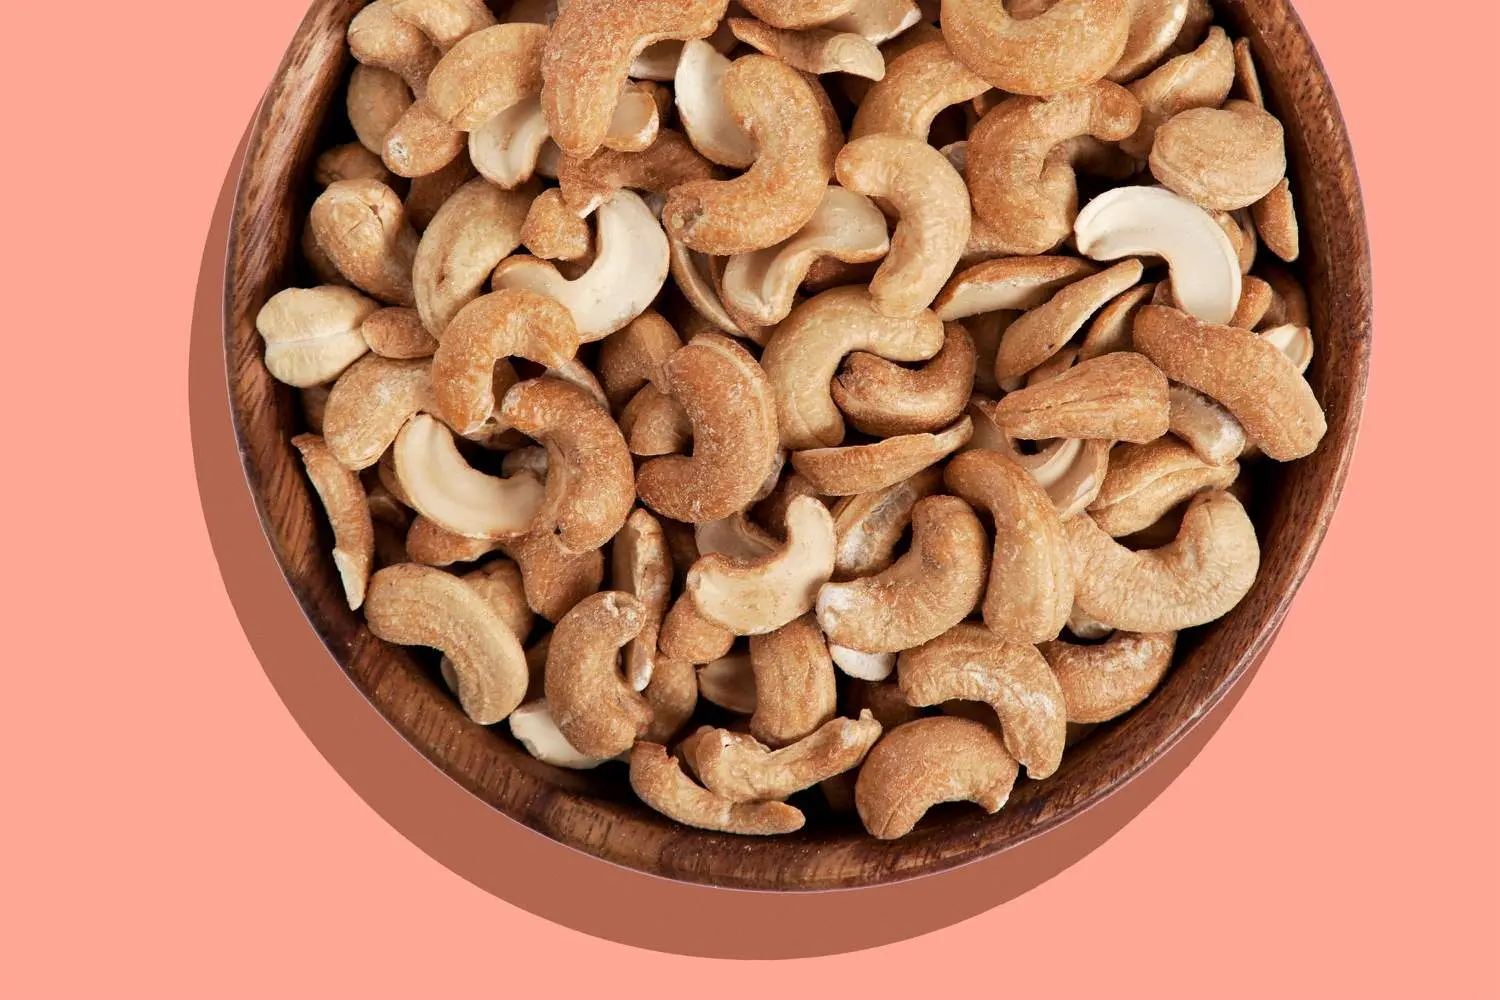 is-cashew-good-for-diabetes-sehatnagar-com